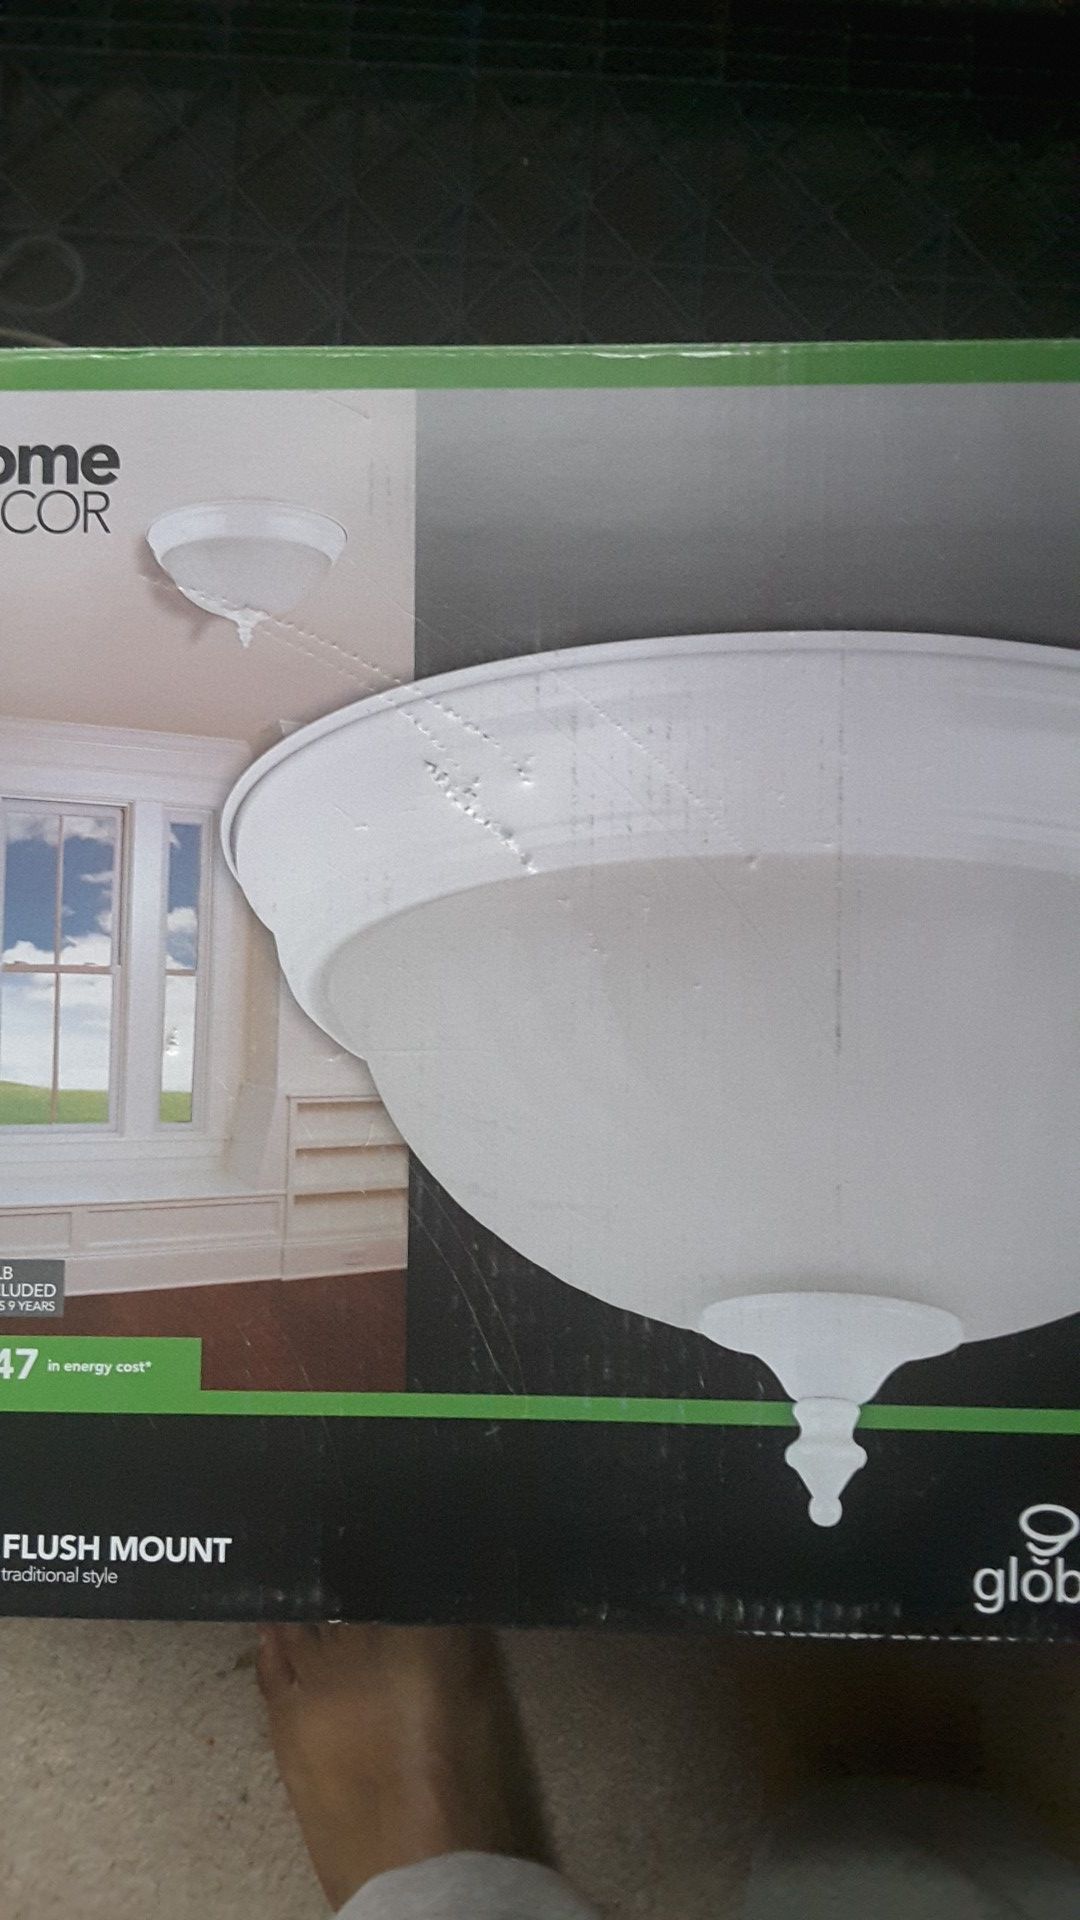 Home decor flush mount globe light fixture... comes with one light bulb